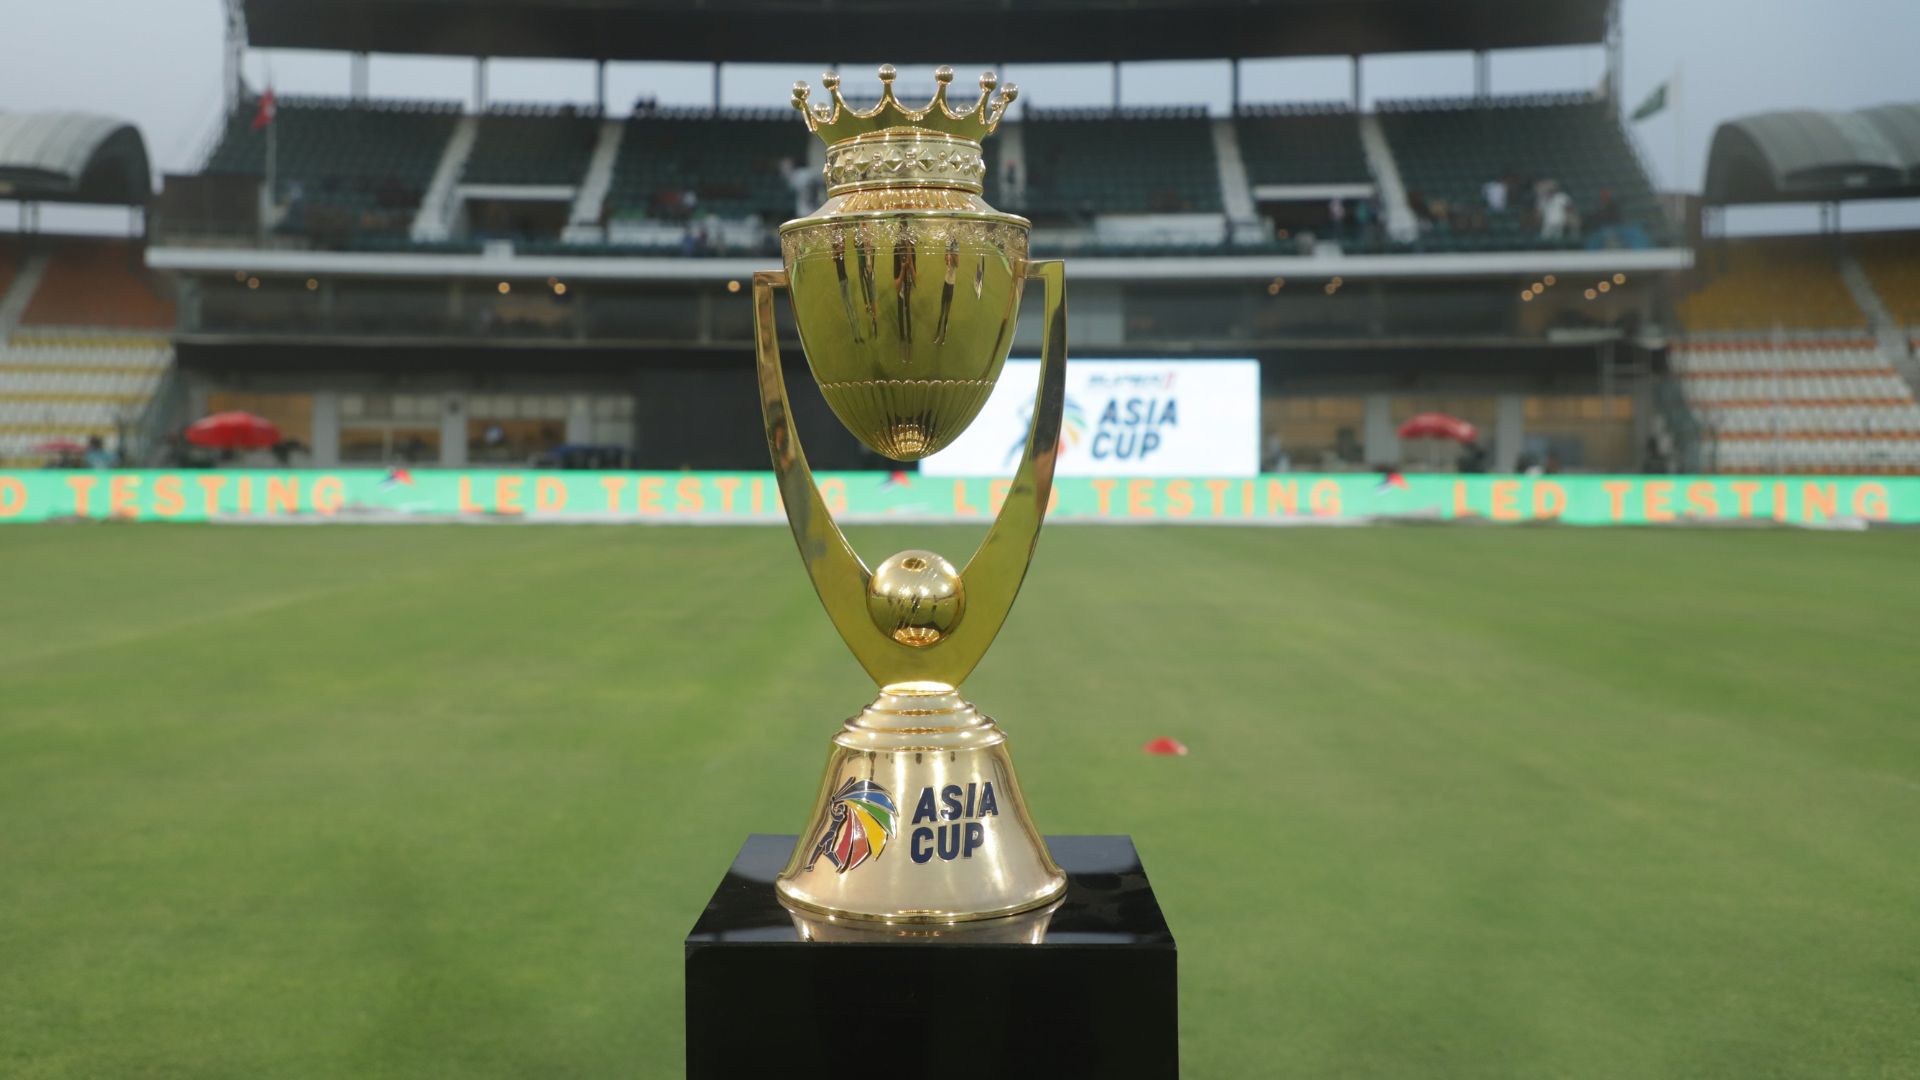 Pakistan Team Asia Cup Trophy